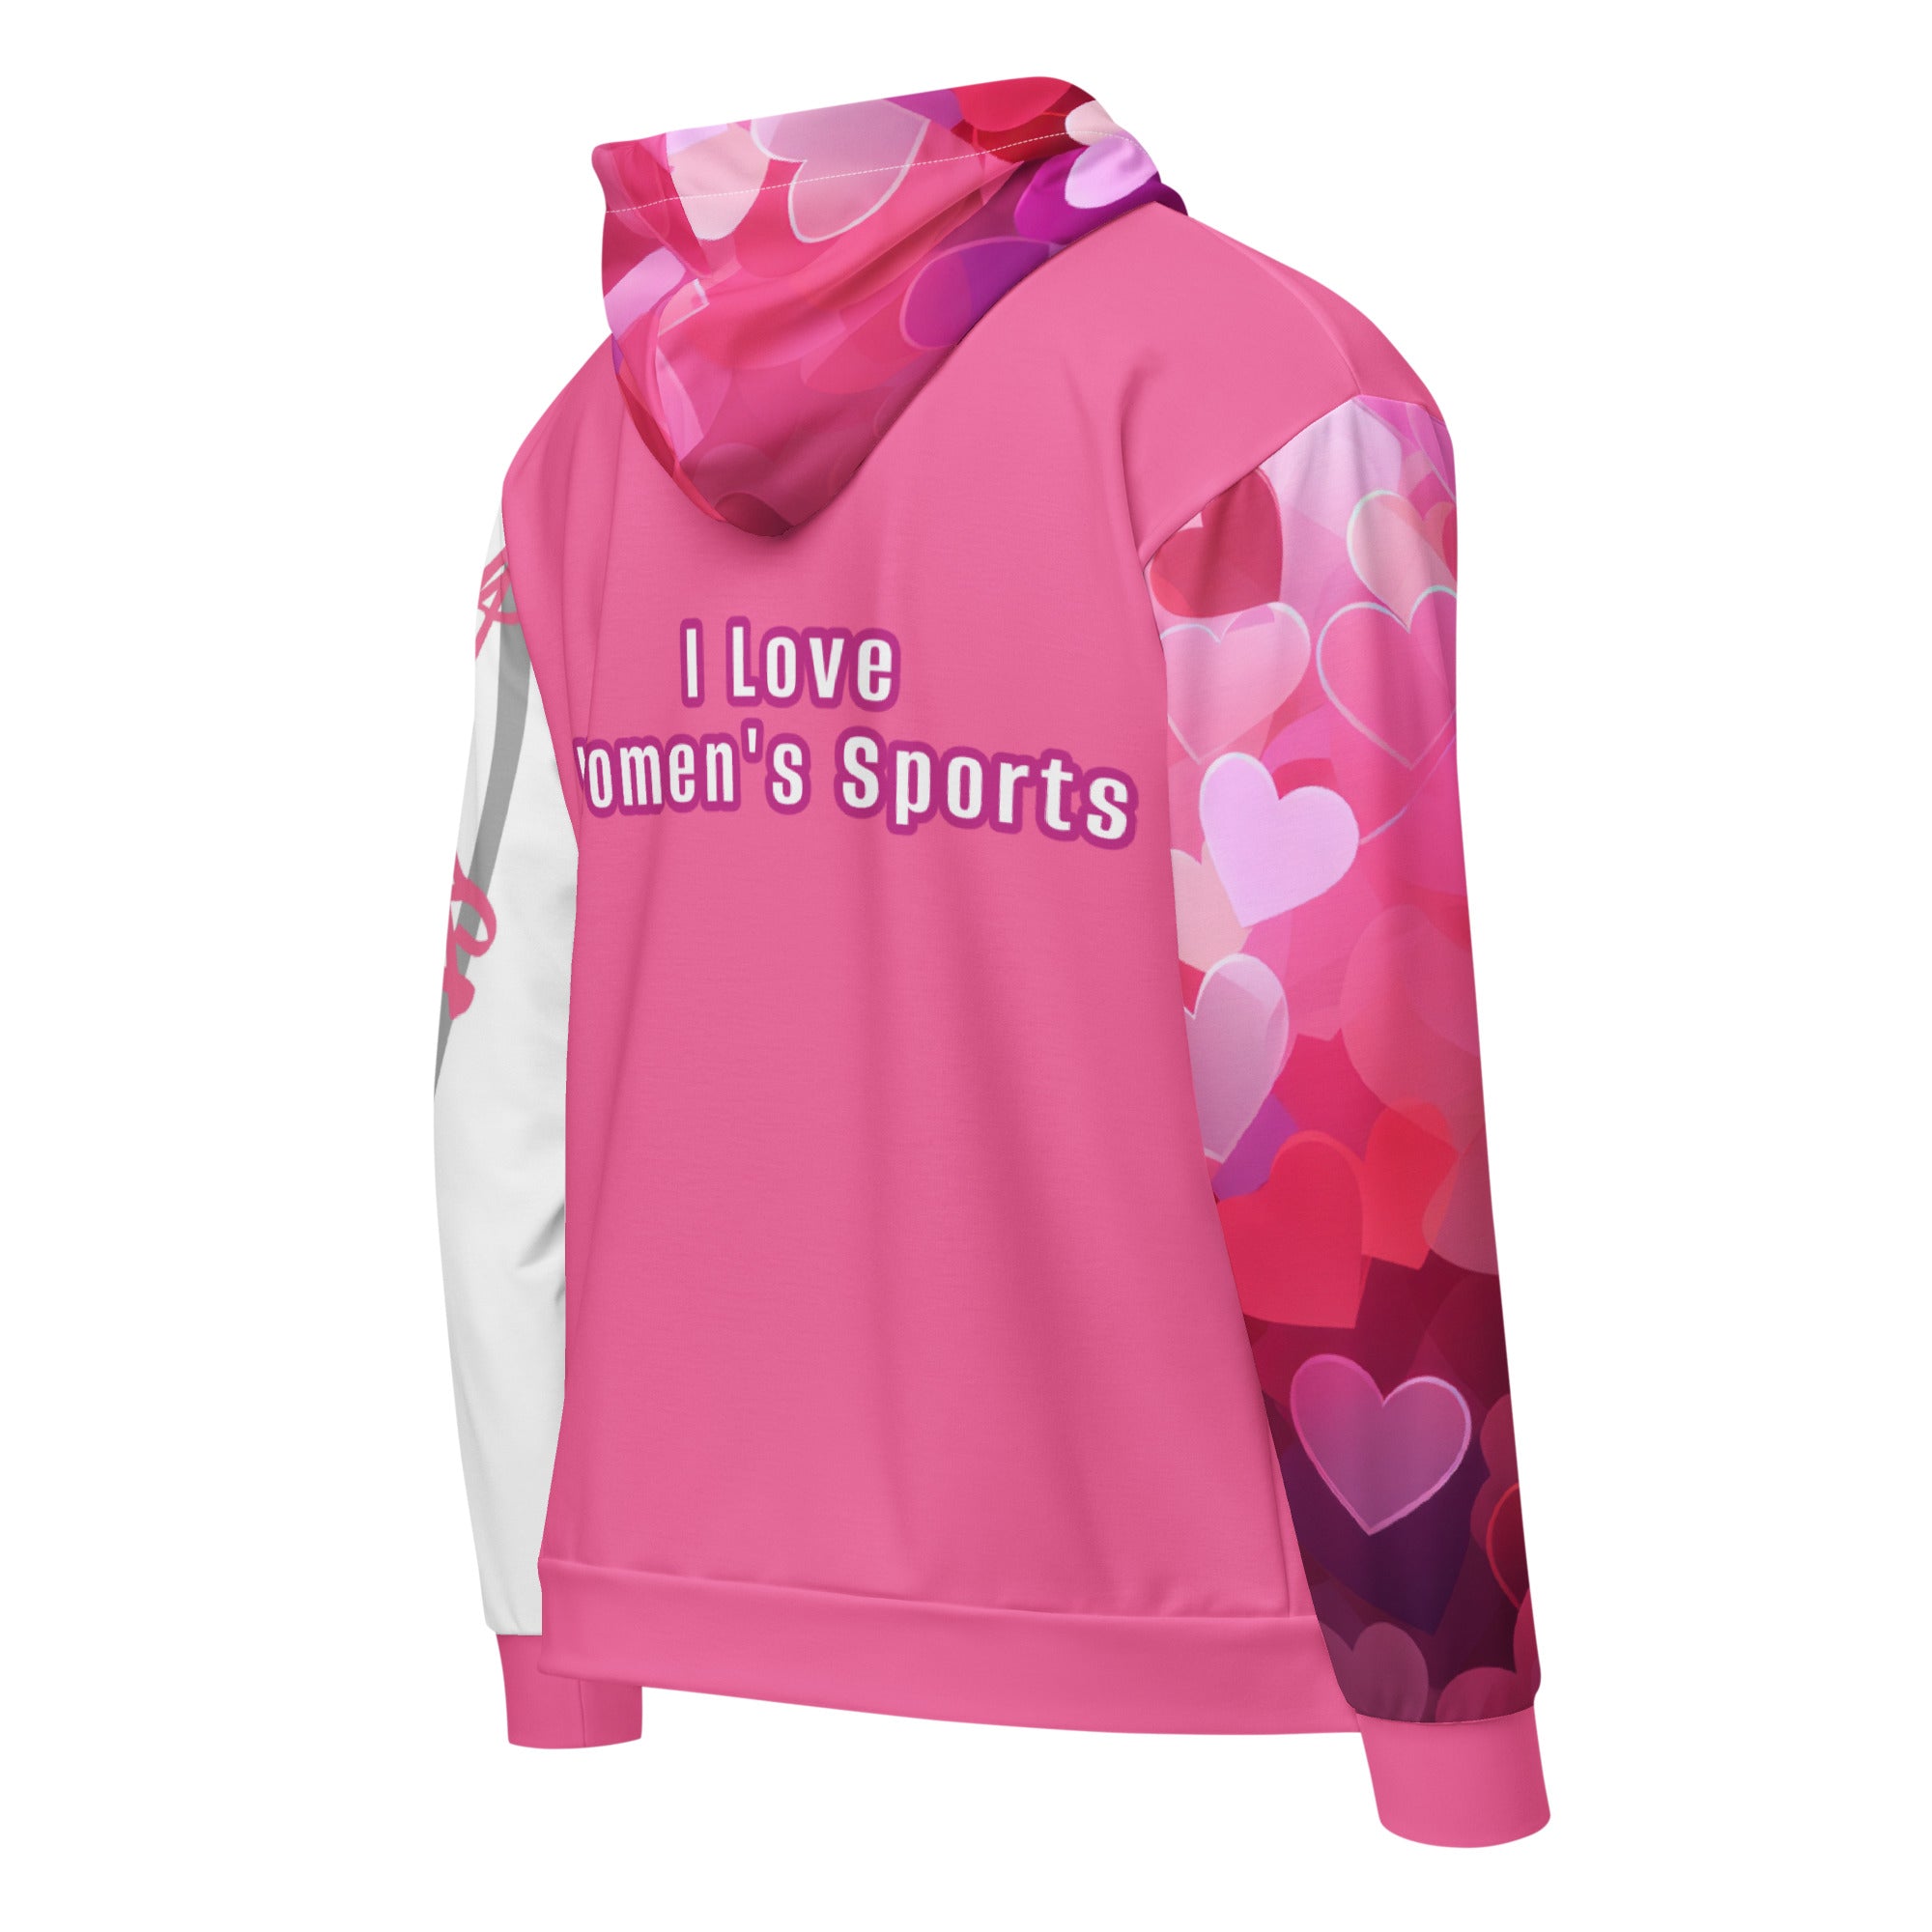 "I Love Women's Sports" Multi Pink Zip Hoodie